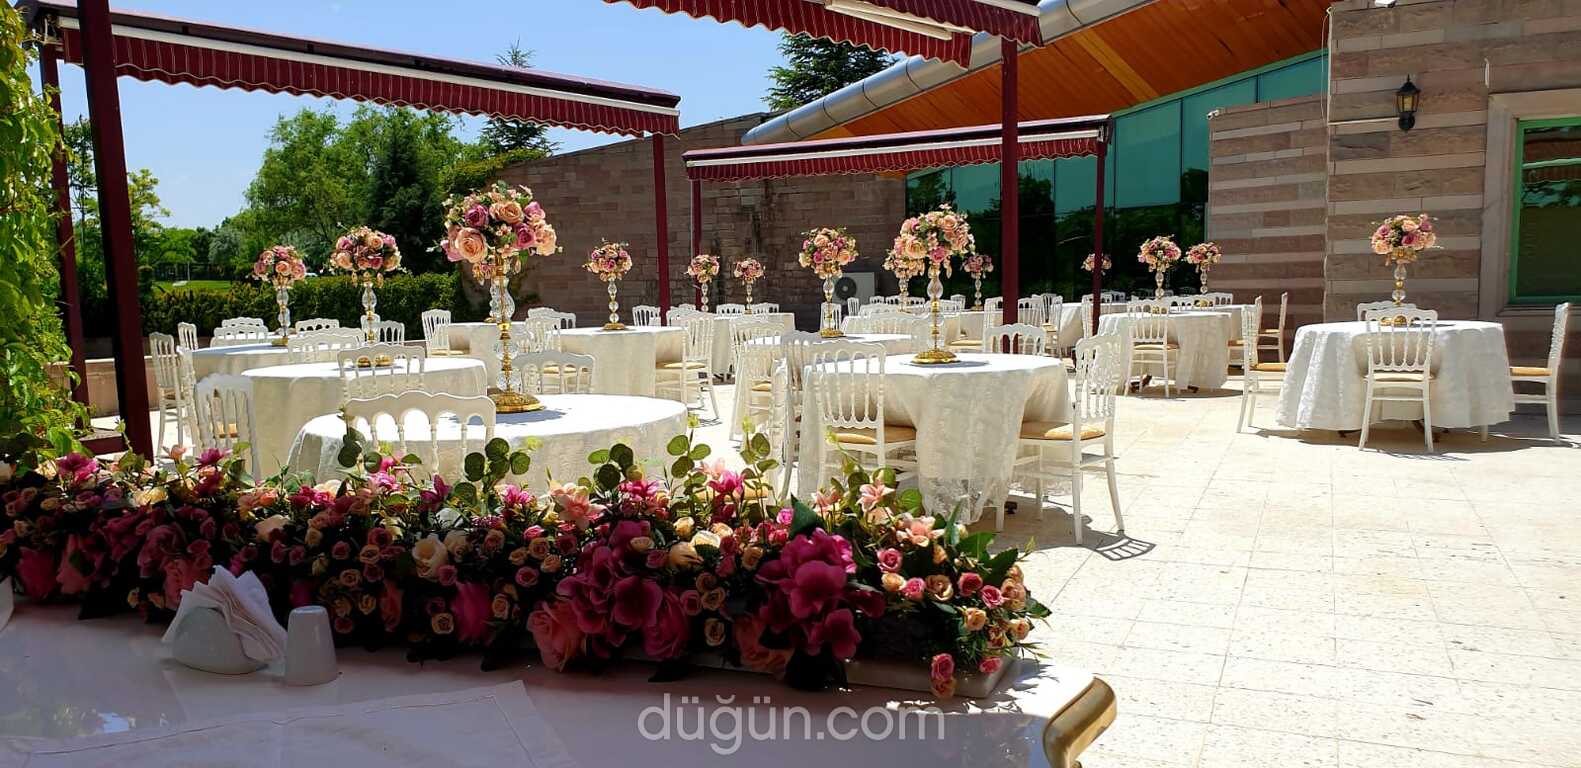 Harikalar Düğün Sarayı Fiyatları - Düğün Salonları Ankara